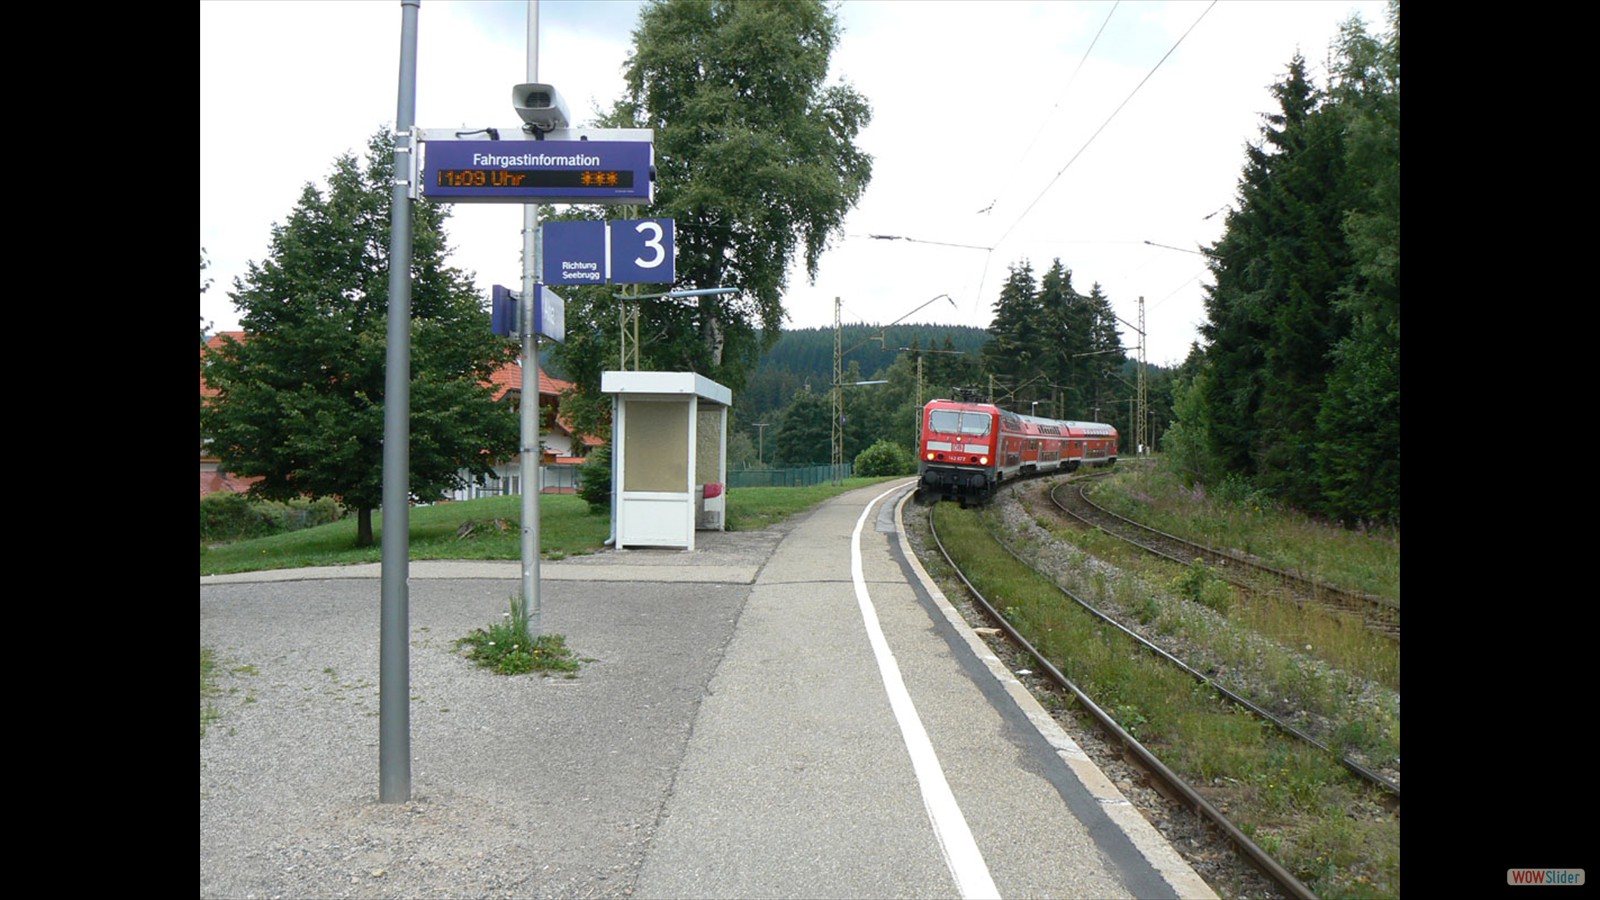 Station Aha.